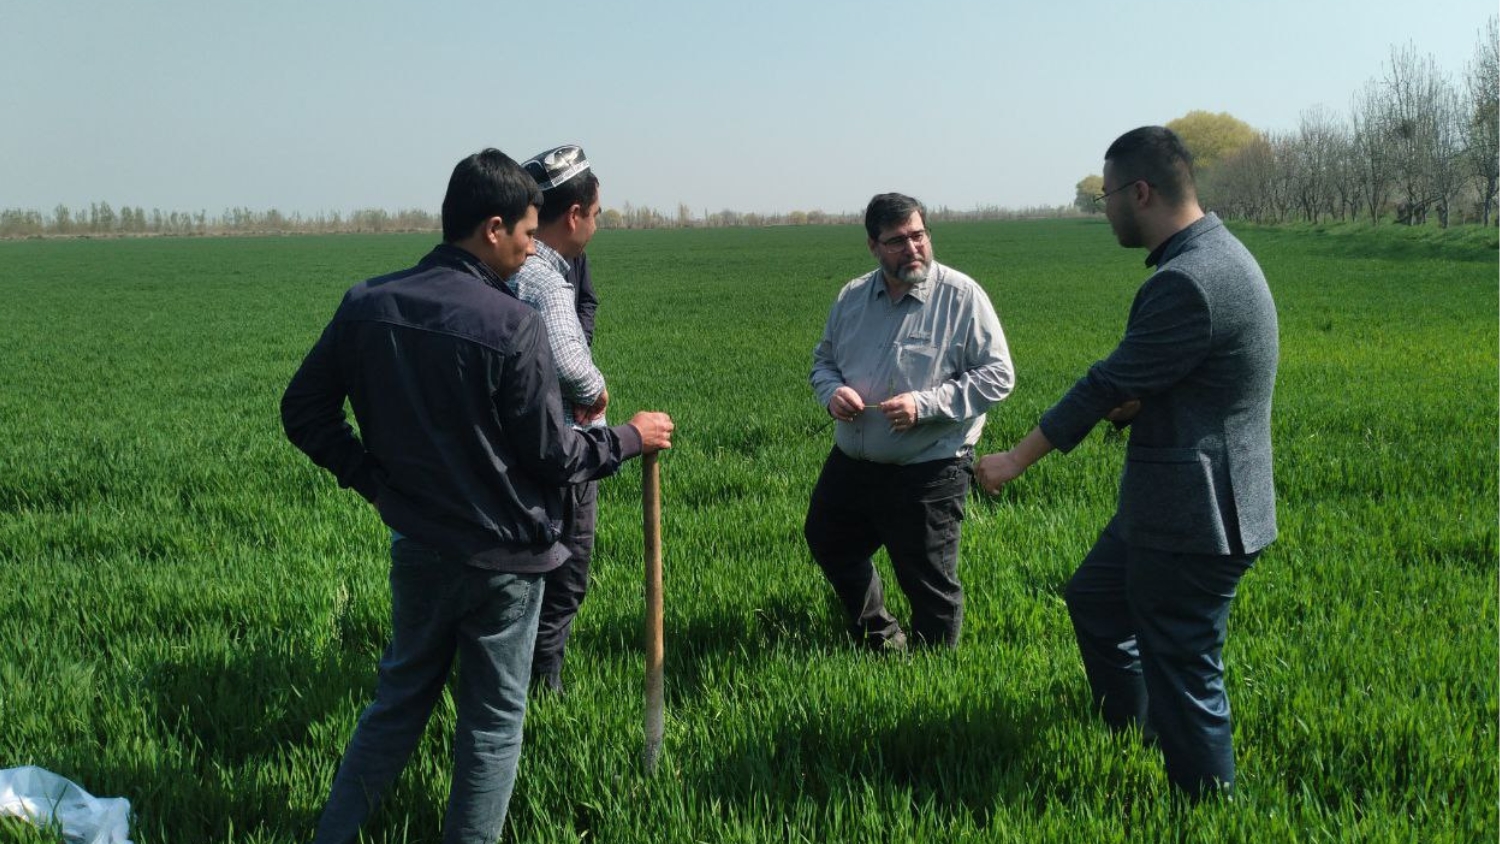 NC State's Luke Gatiboni meets with Uzbek farmers in field to discuss soil fertility.